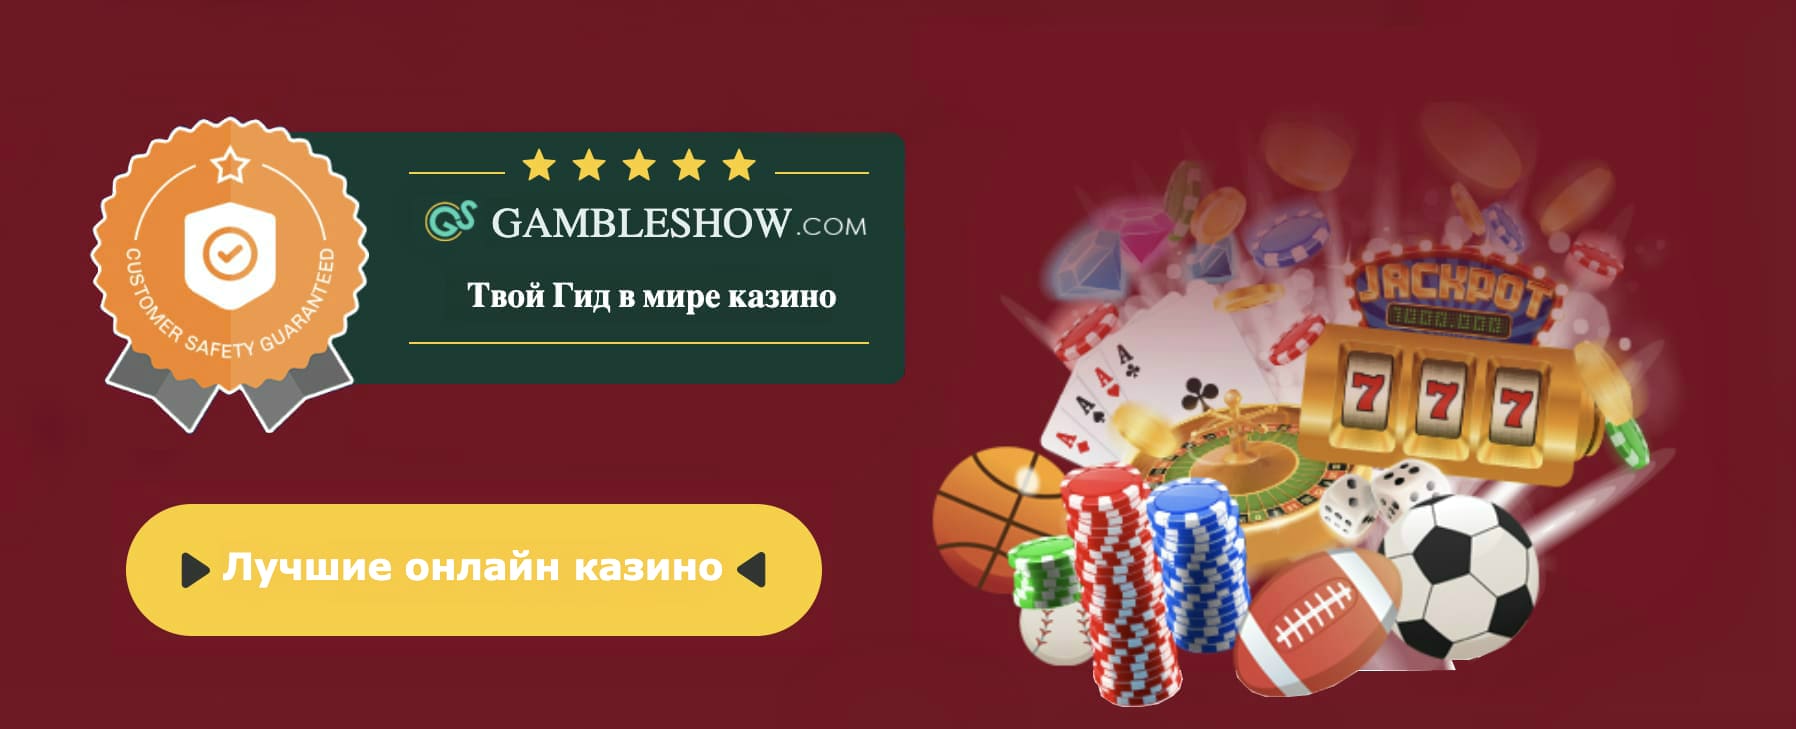 Интернет казино азартные игры онлайн